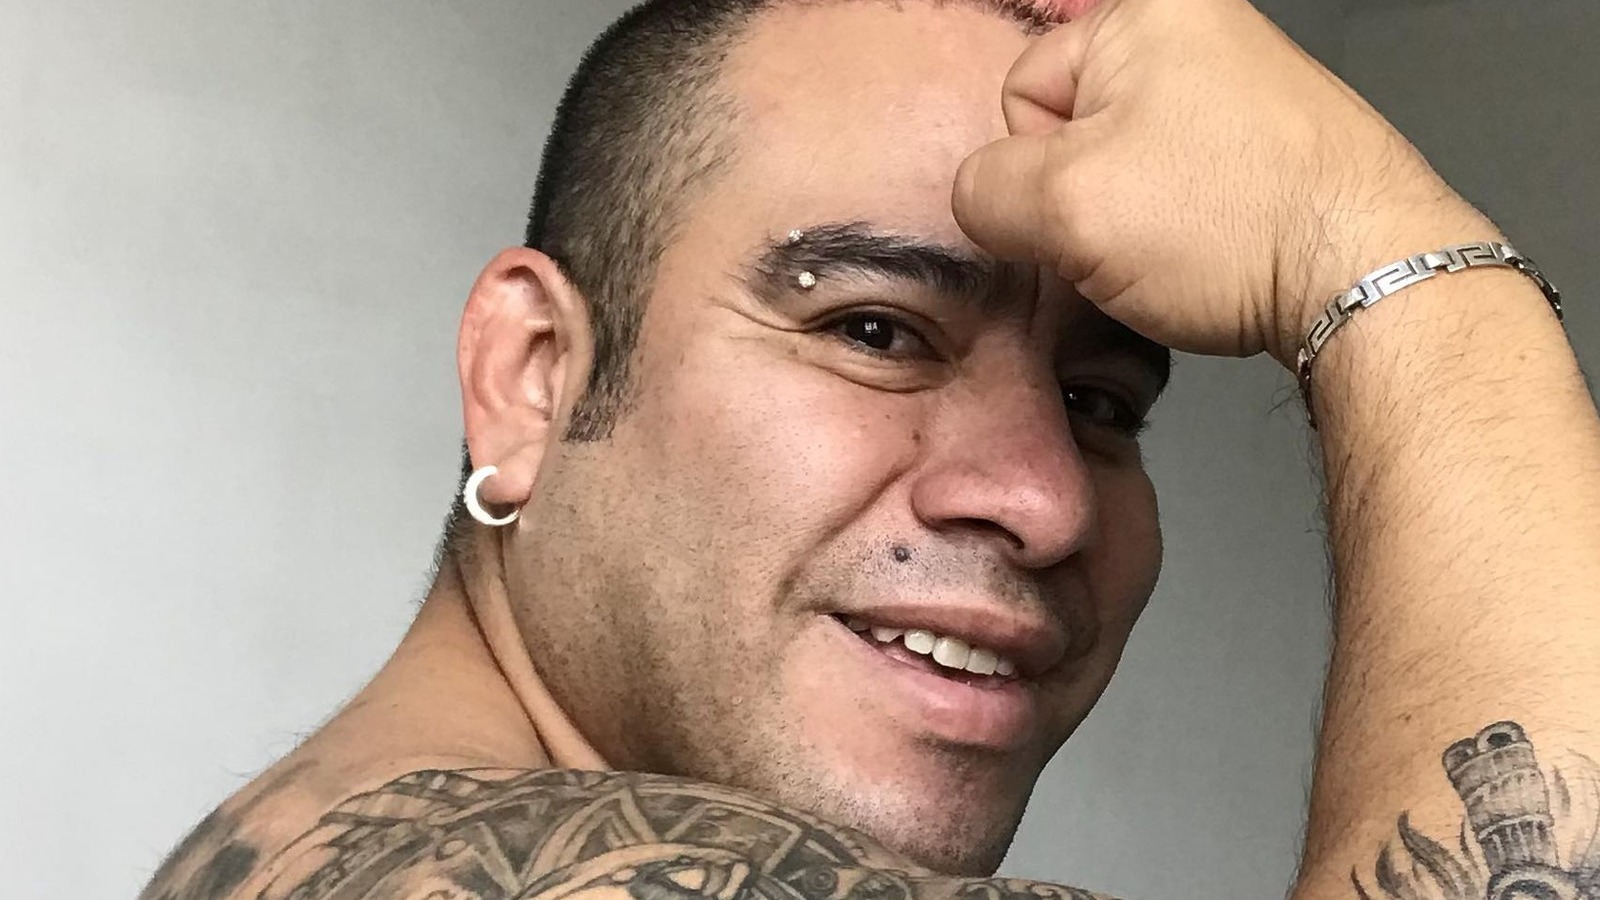 Luchador Máximo anuncia que no se retira después de no haberse retirado nunca